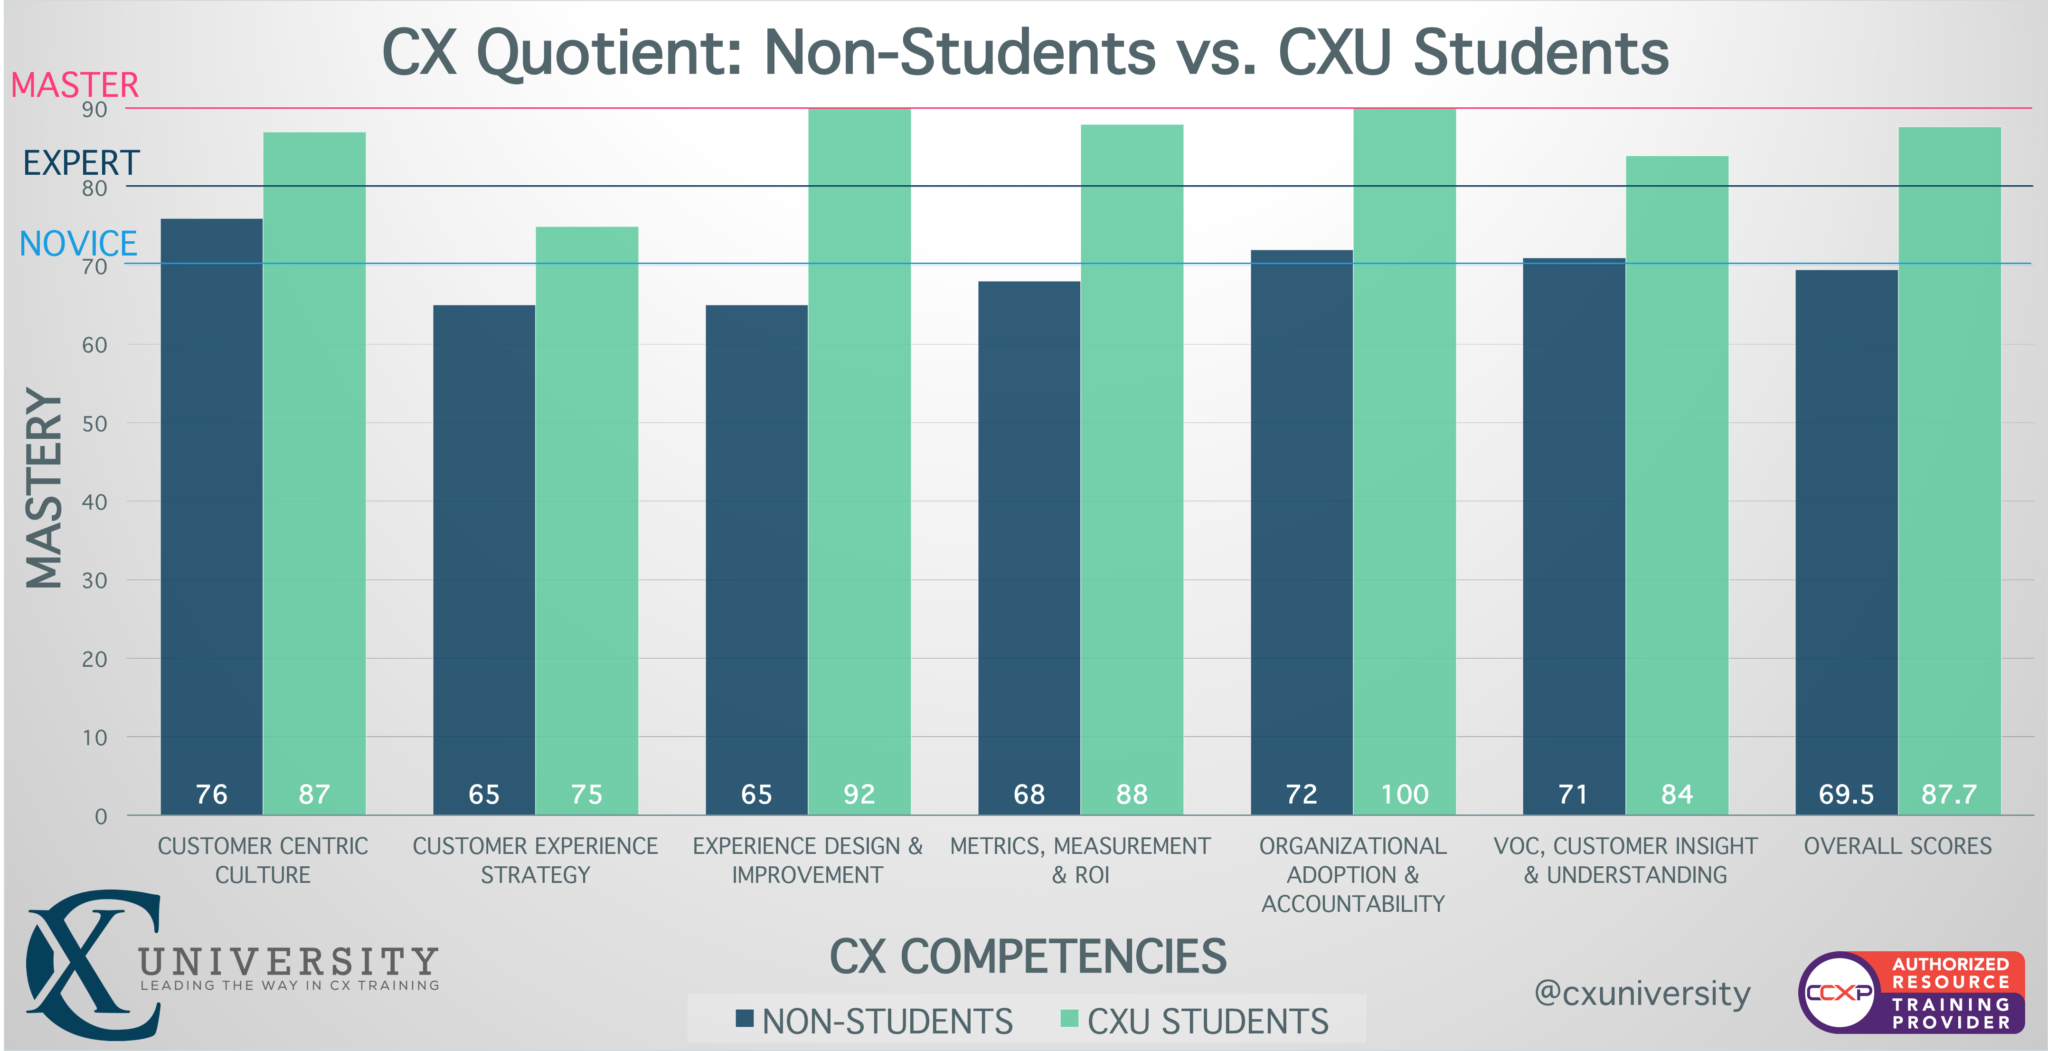 CX Quotient data1